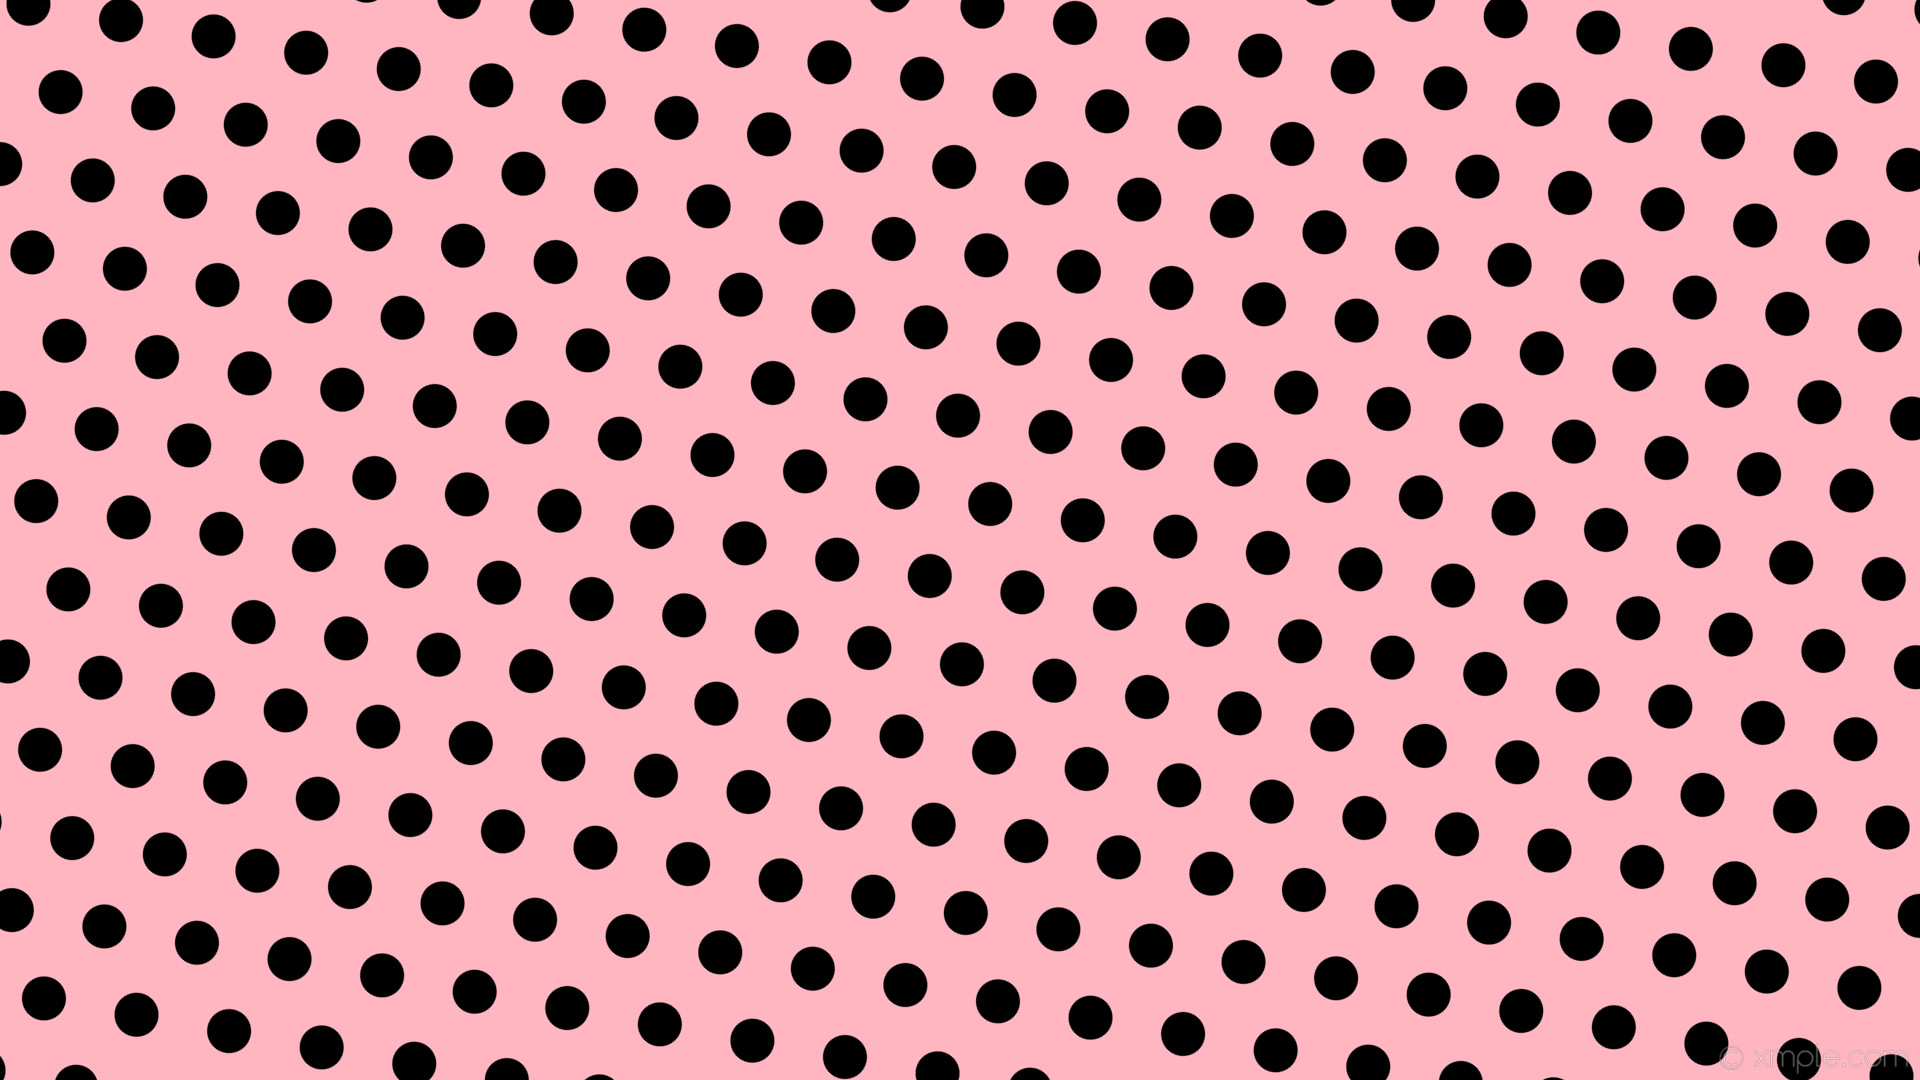 1920x1080 wallpaper pink polka dots hexagon black light pink #ffb6c1 #000000 diagonal  50Â° 44px